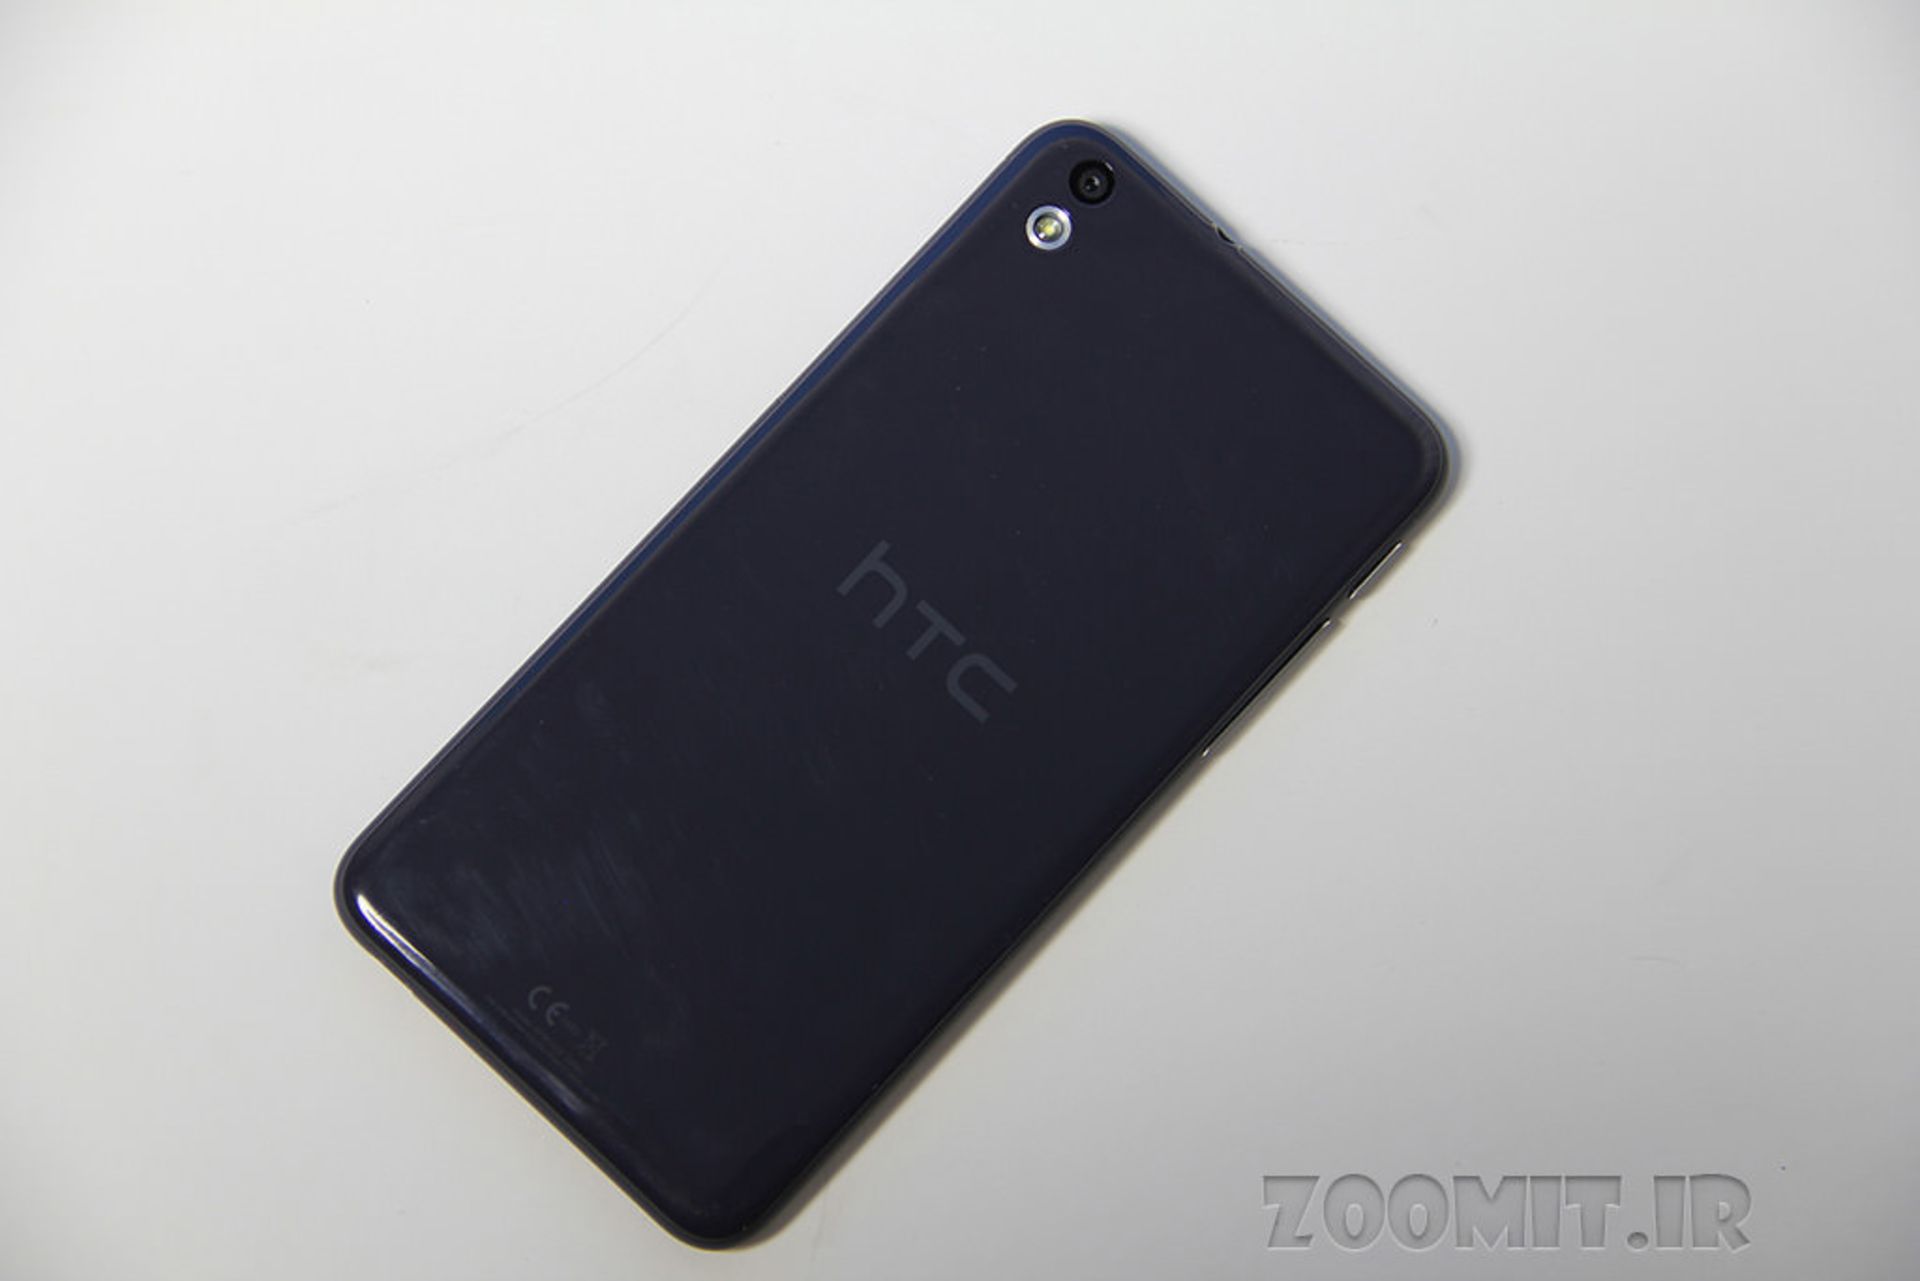 بررسی فبلت HTC Desire 816